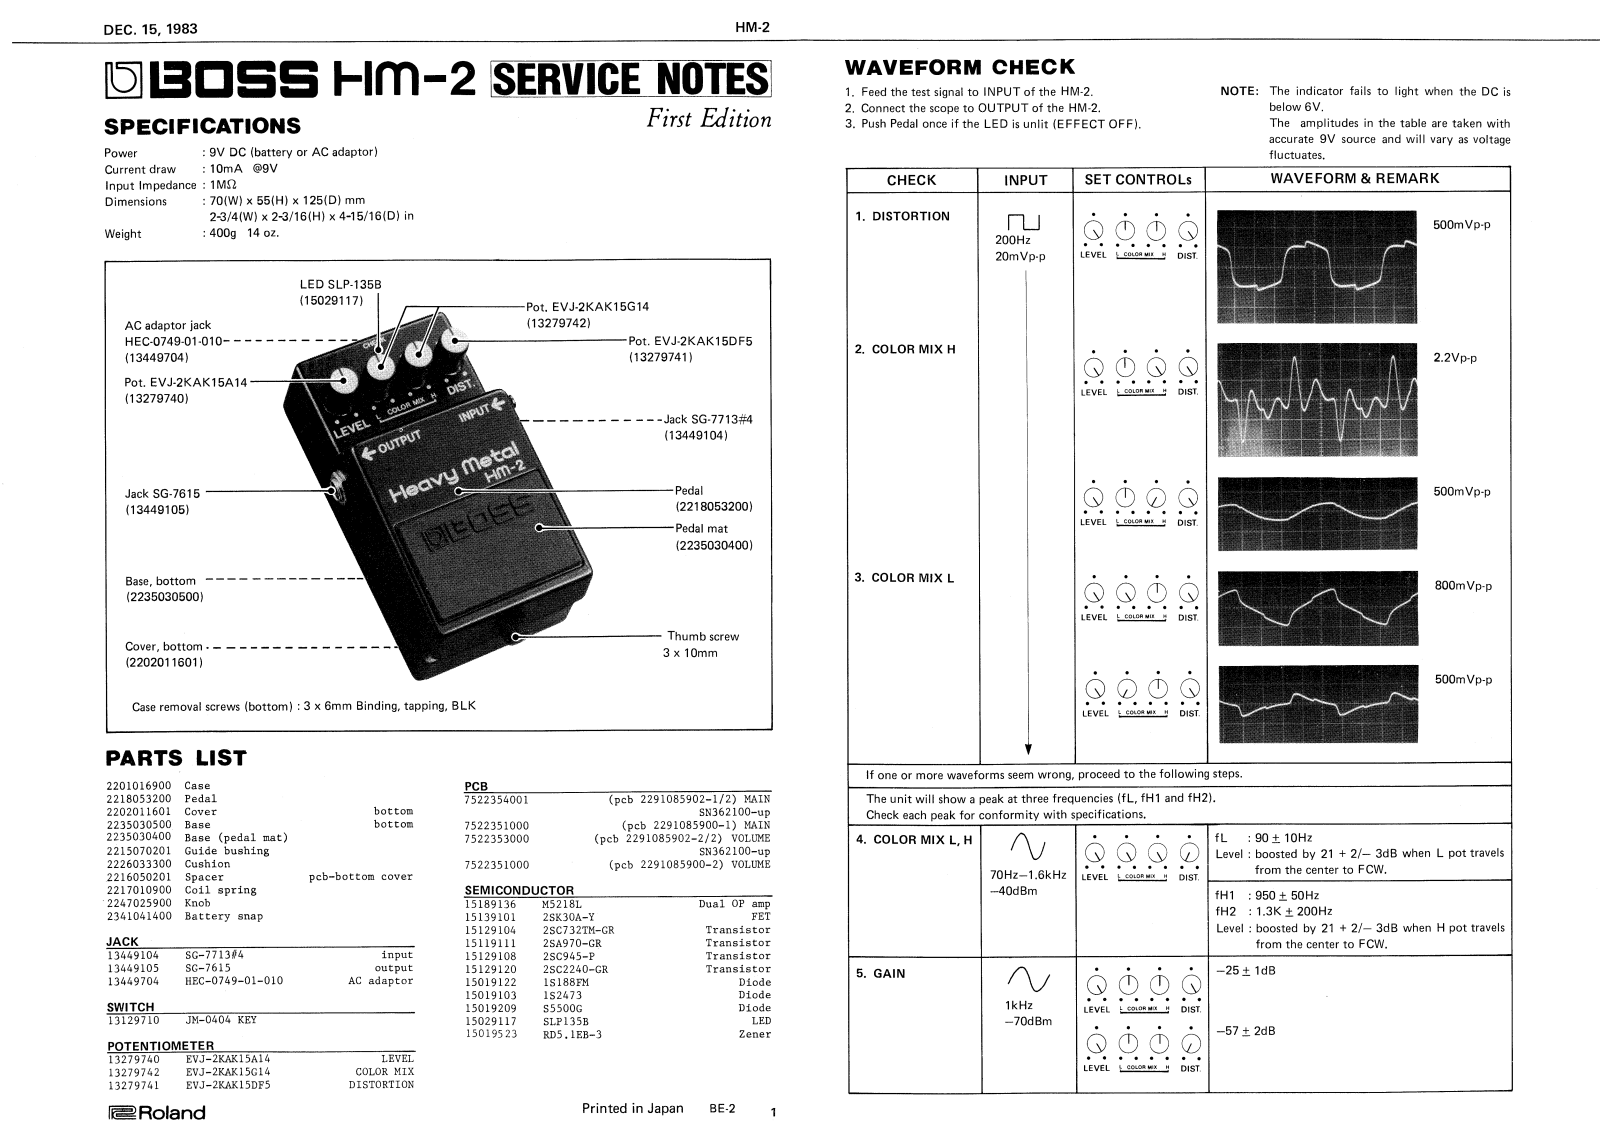 Boss HM-2 Service Manual